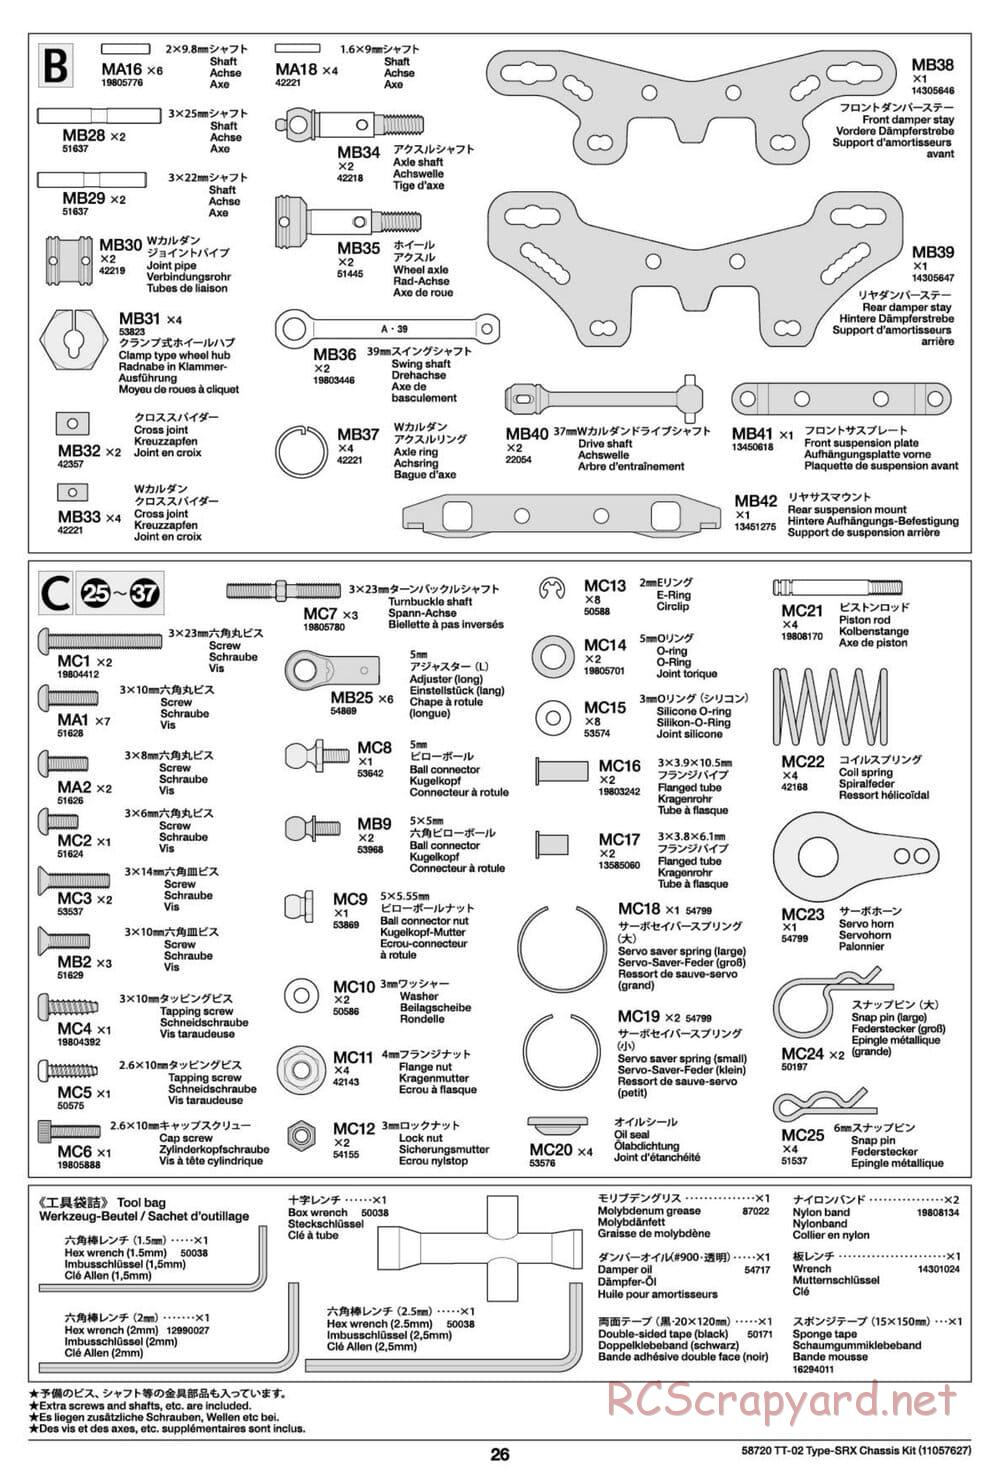 Tamiya - TT-02 Type-SRX Chassis - Manual - Page 26